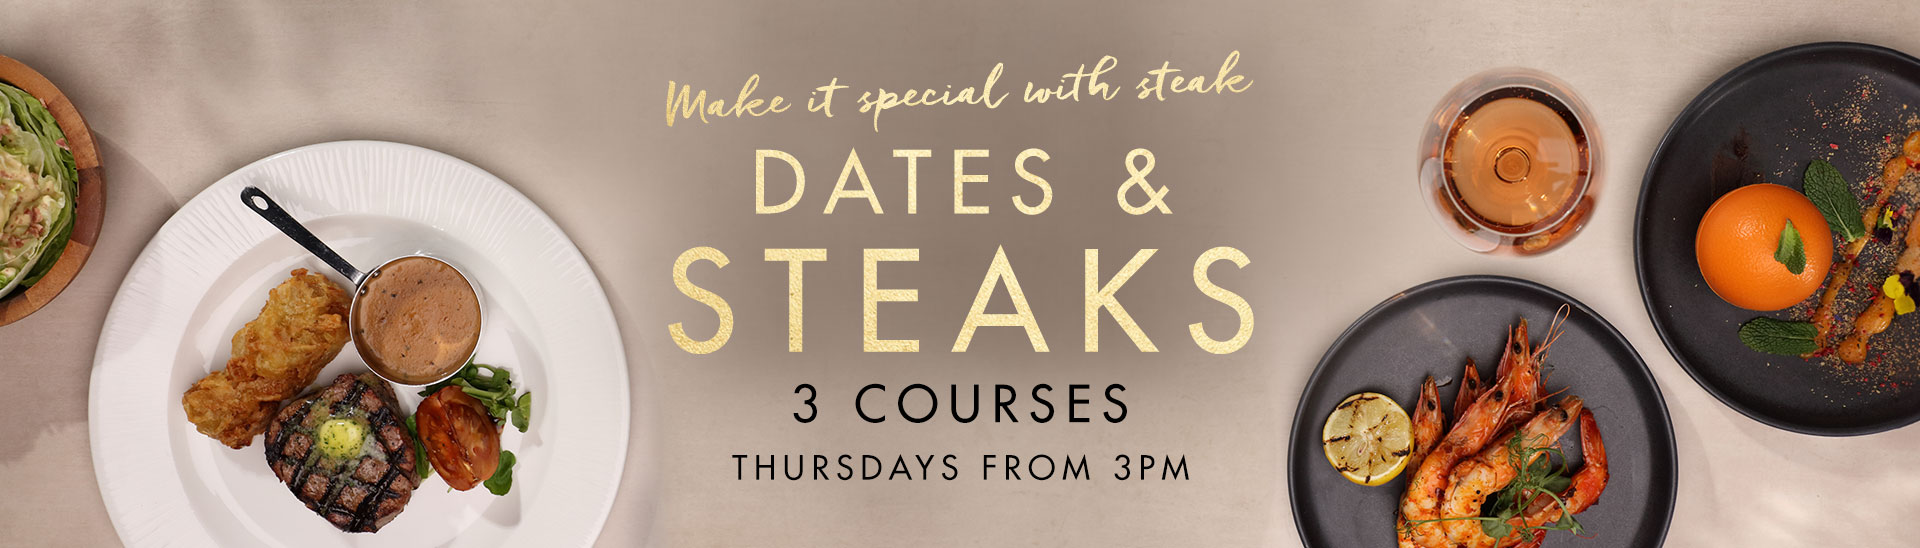 Dates & Steaks at Miller & Carter Sutton Park